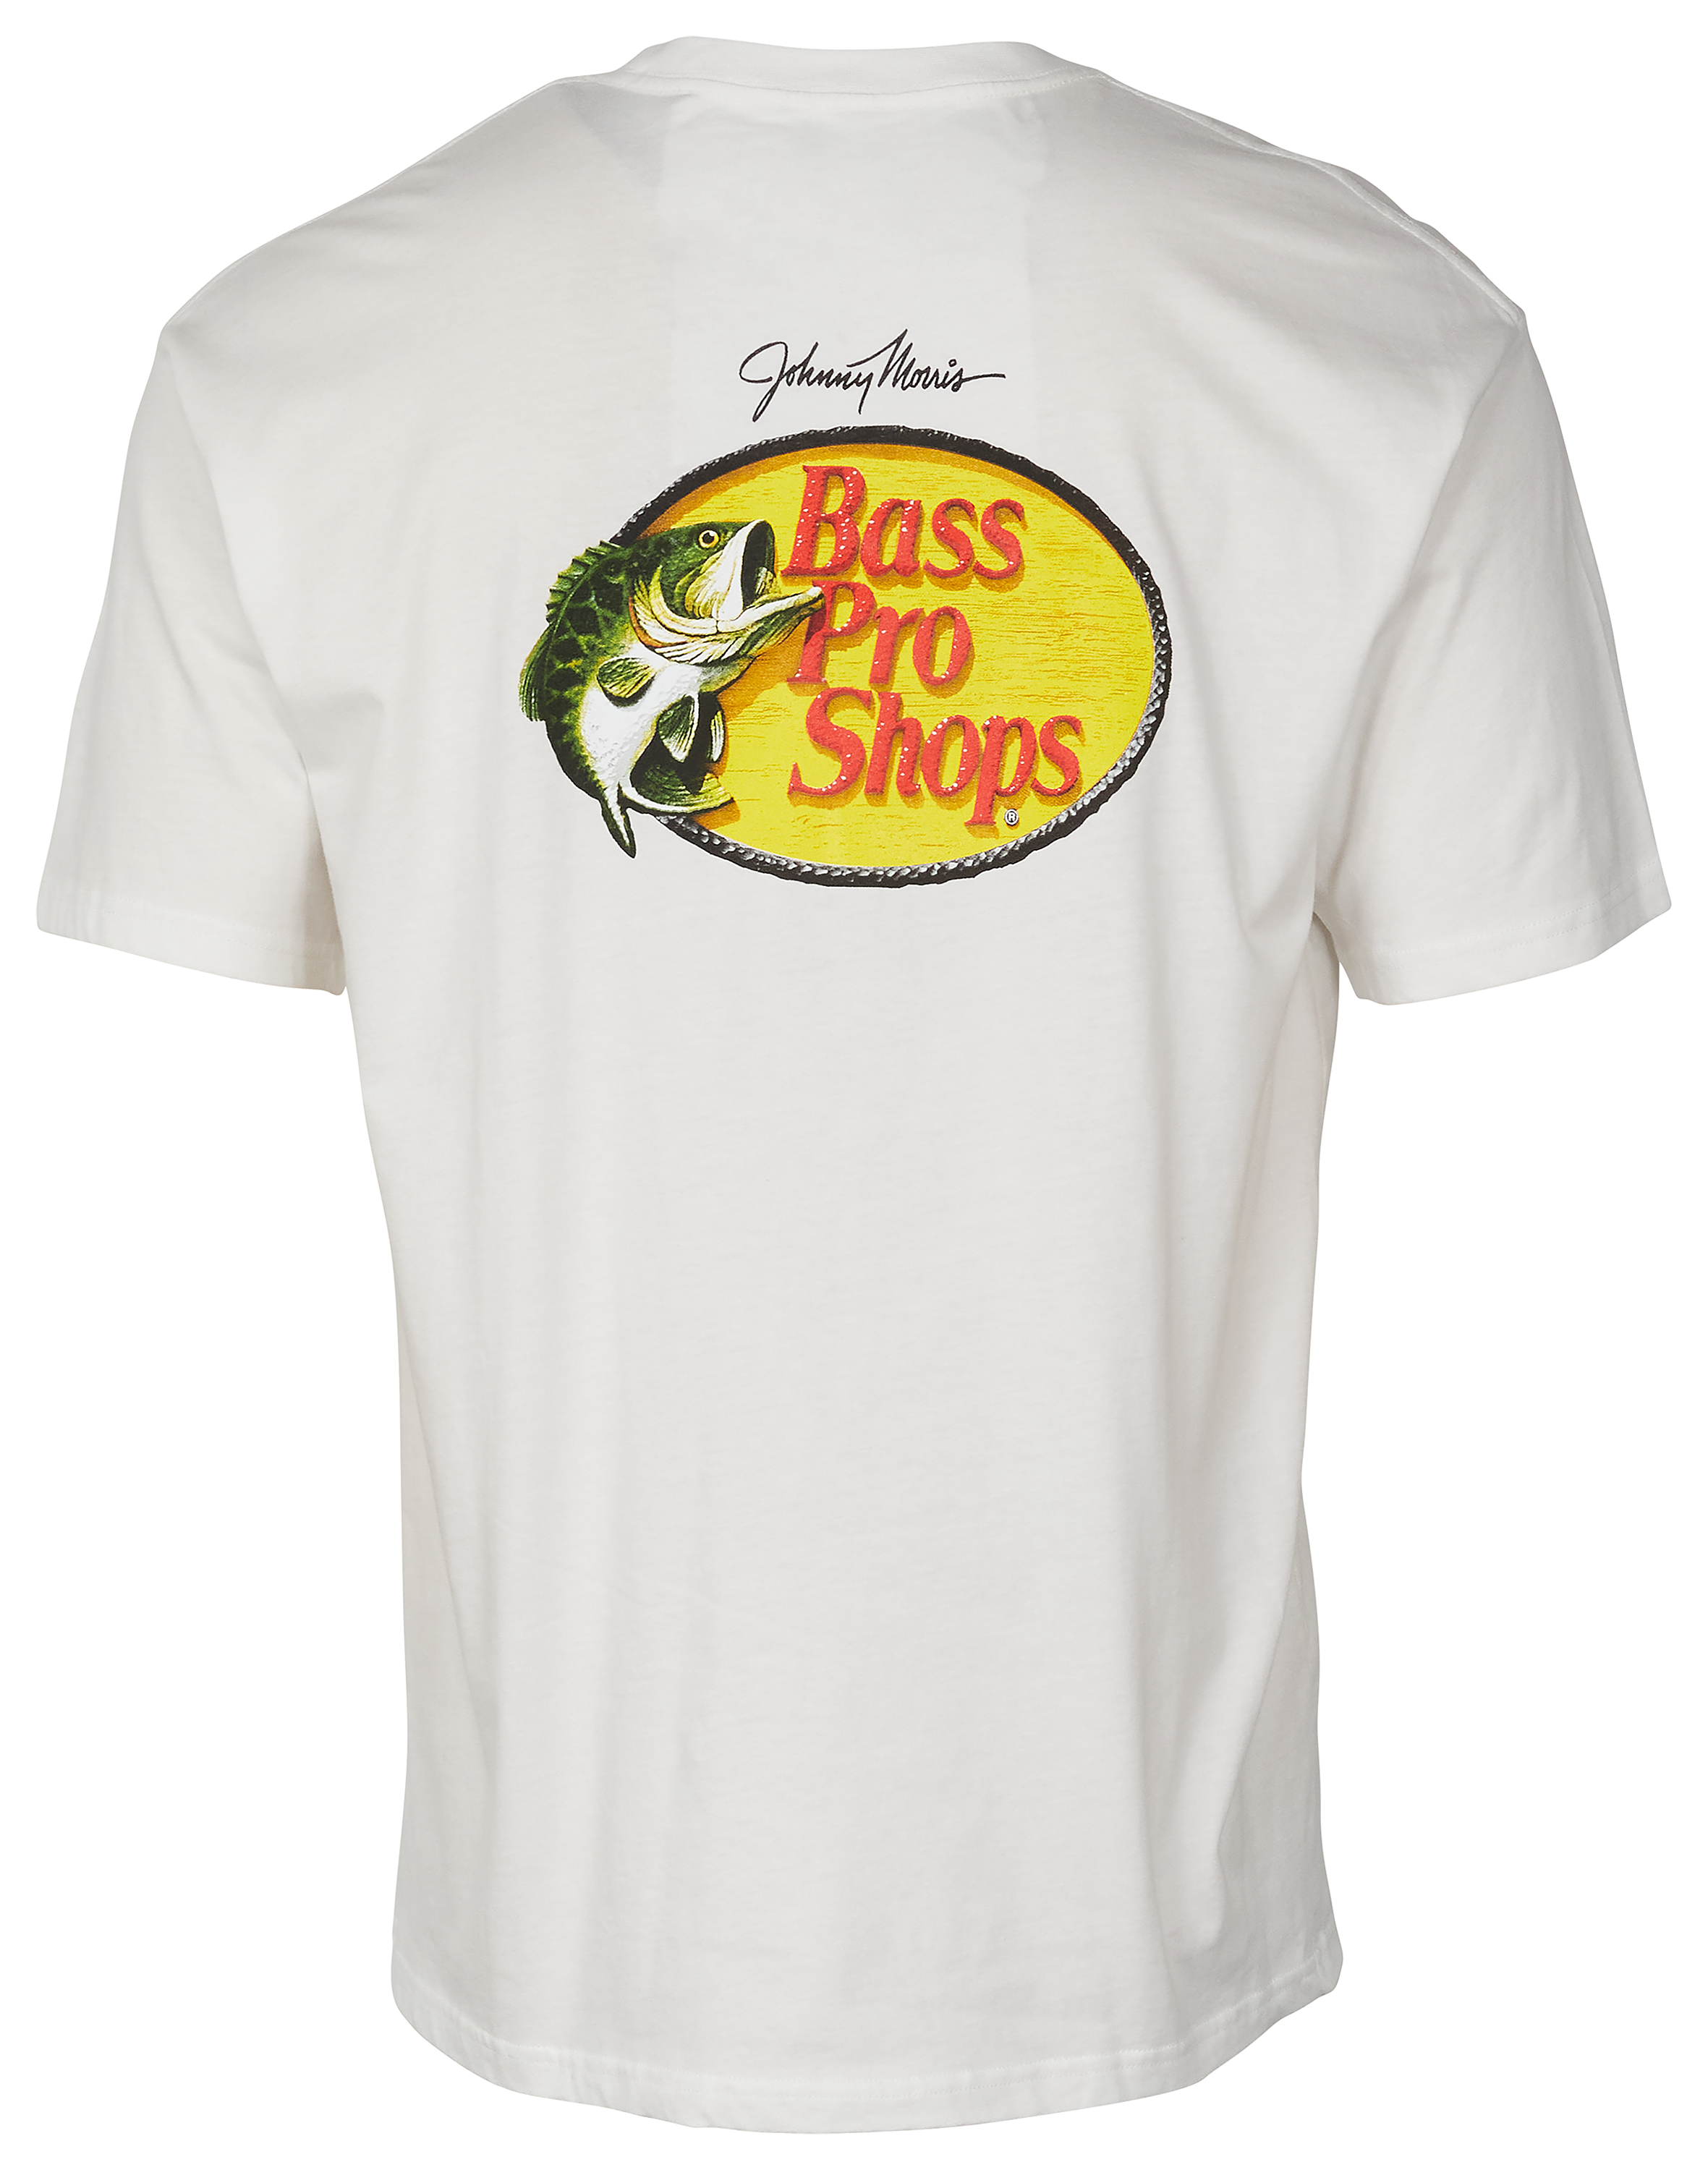 Bass pro shop vintage t shirt XL, Men's, Ottawa